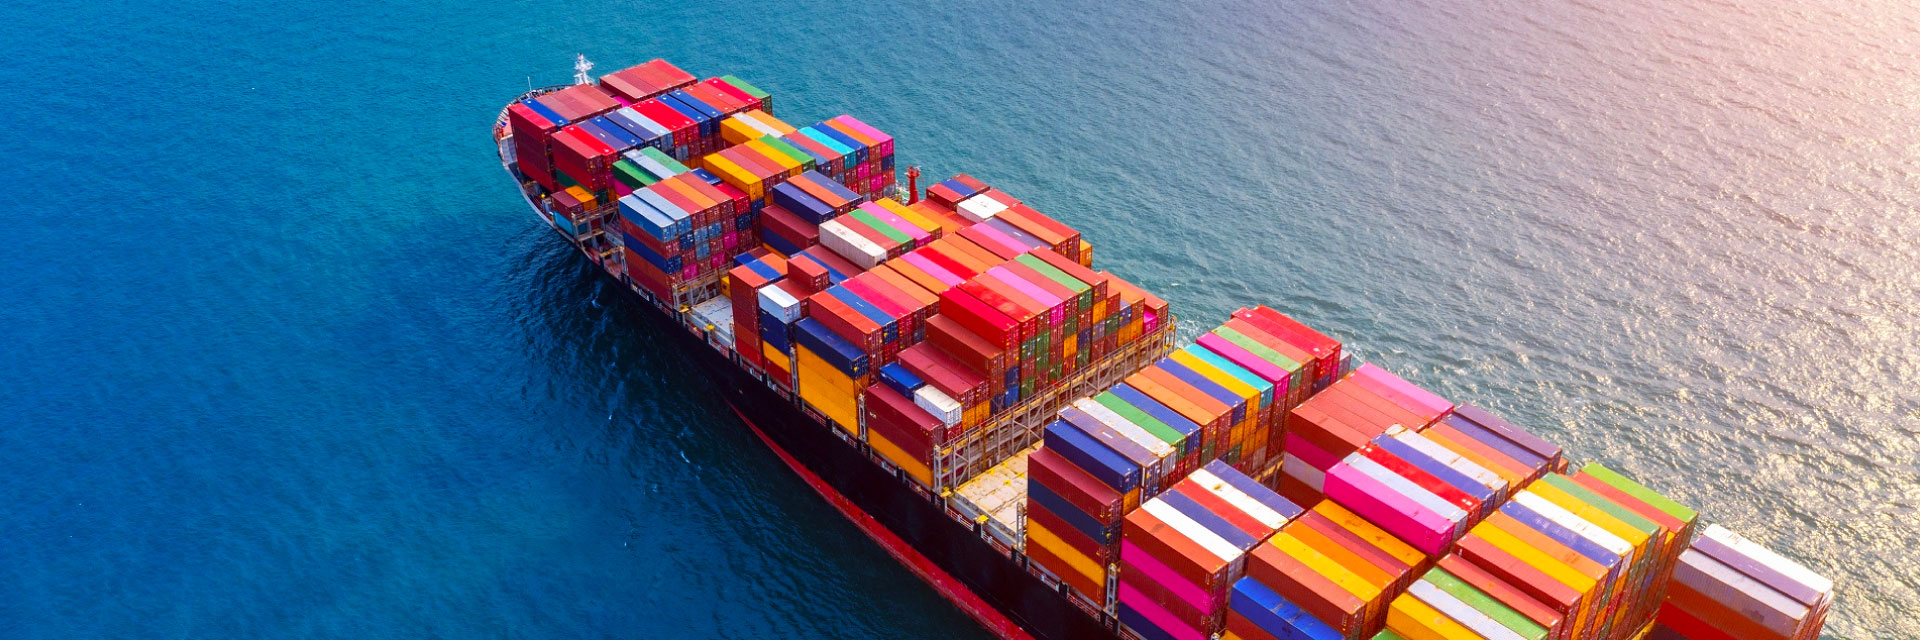 Como funciona o seguro de cargas no transporte marítimo